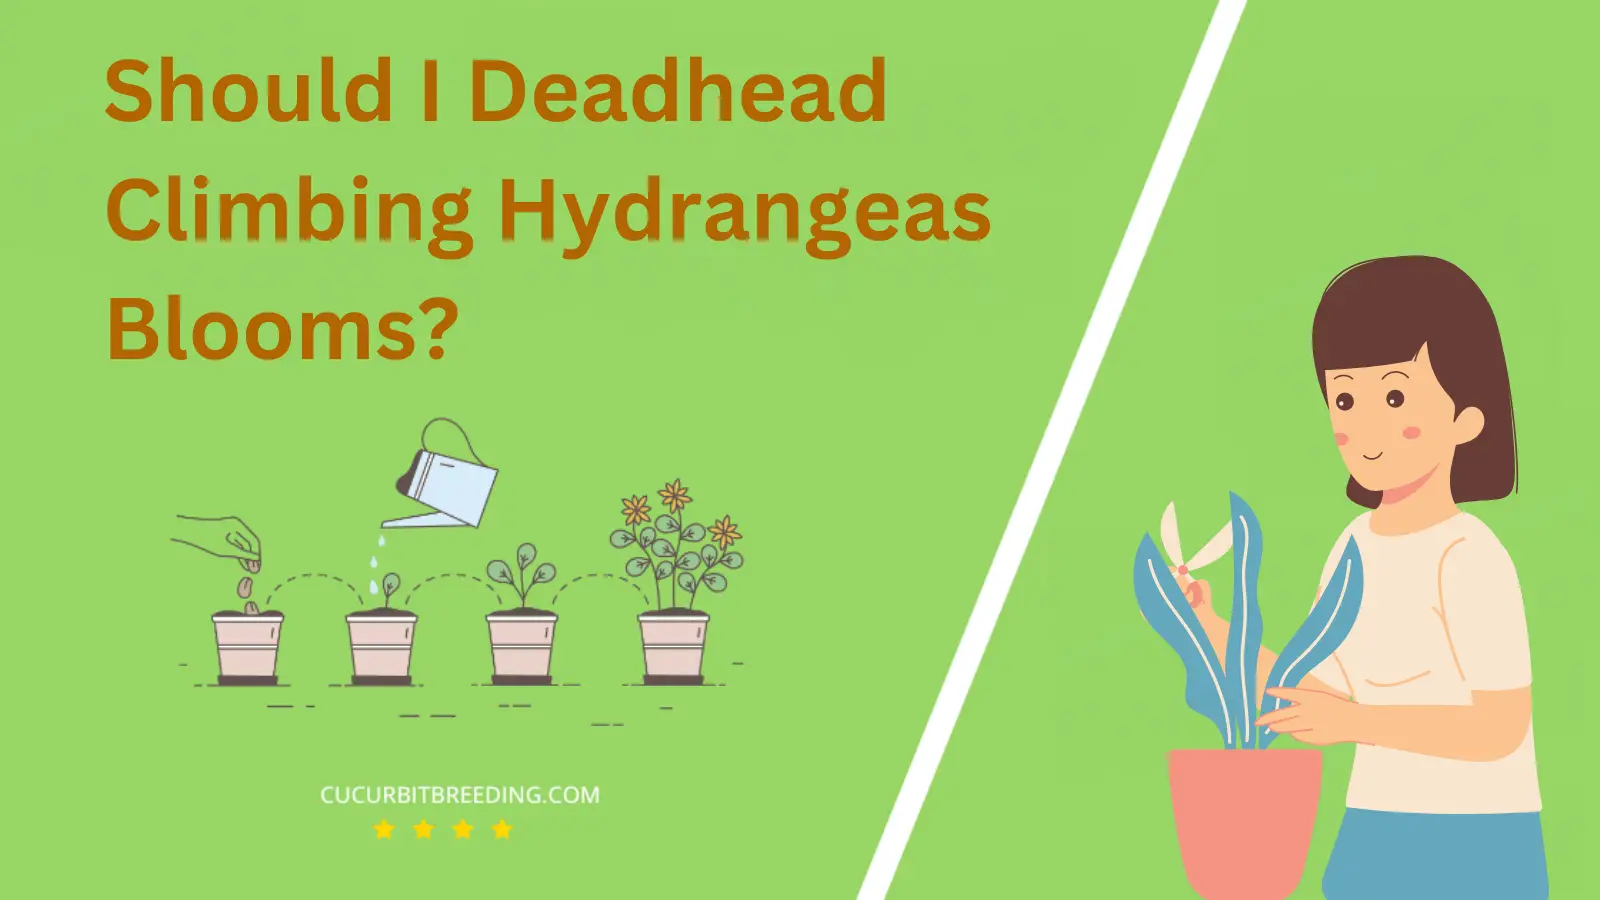 Should I Deadhead Climbing Hydrangeas Blooms?